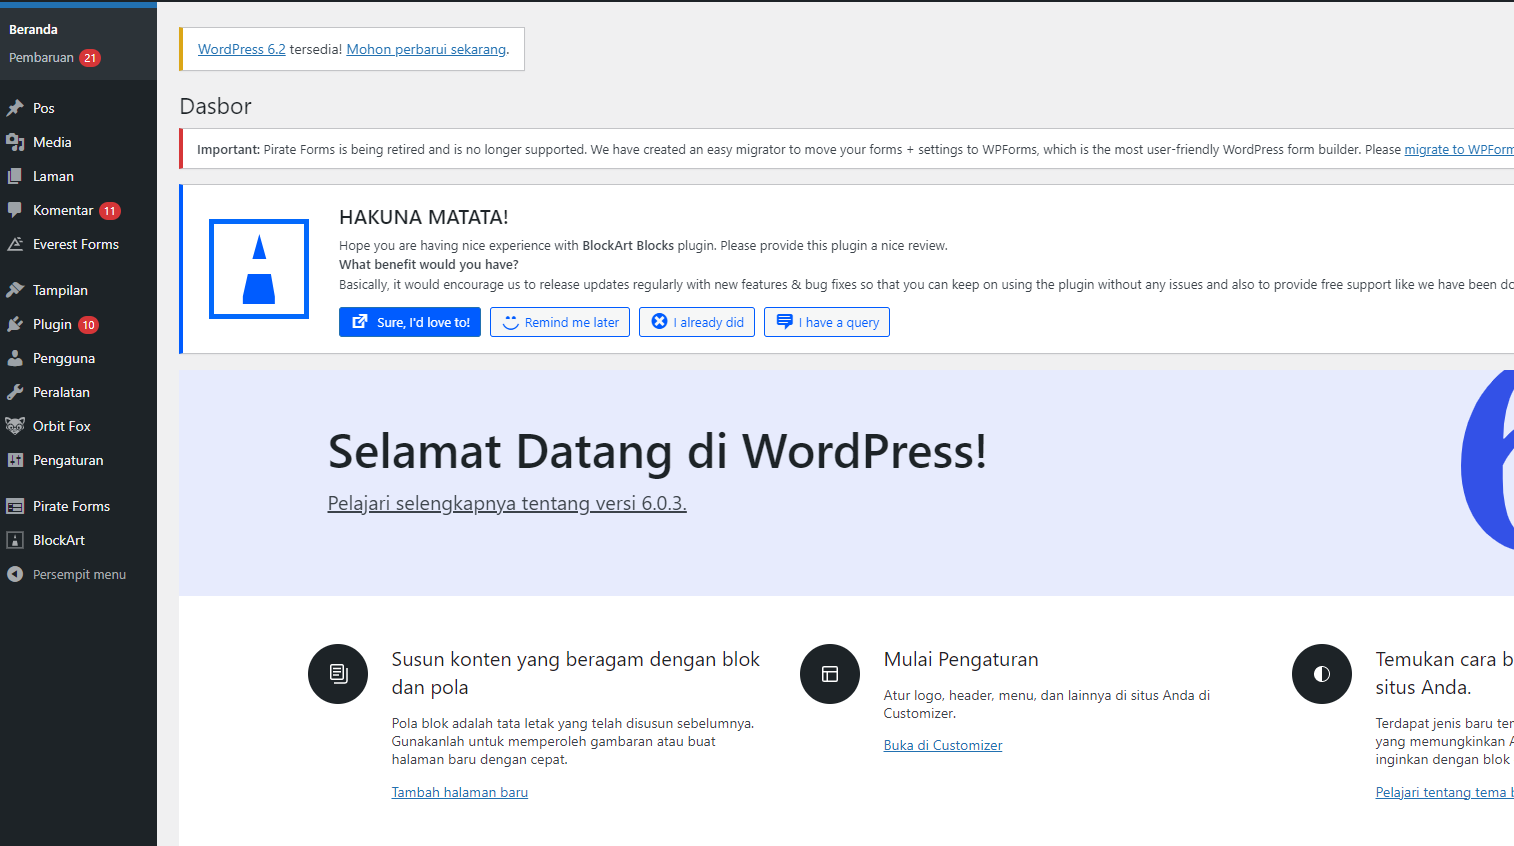 login wordpress